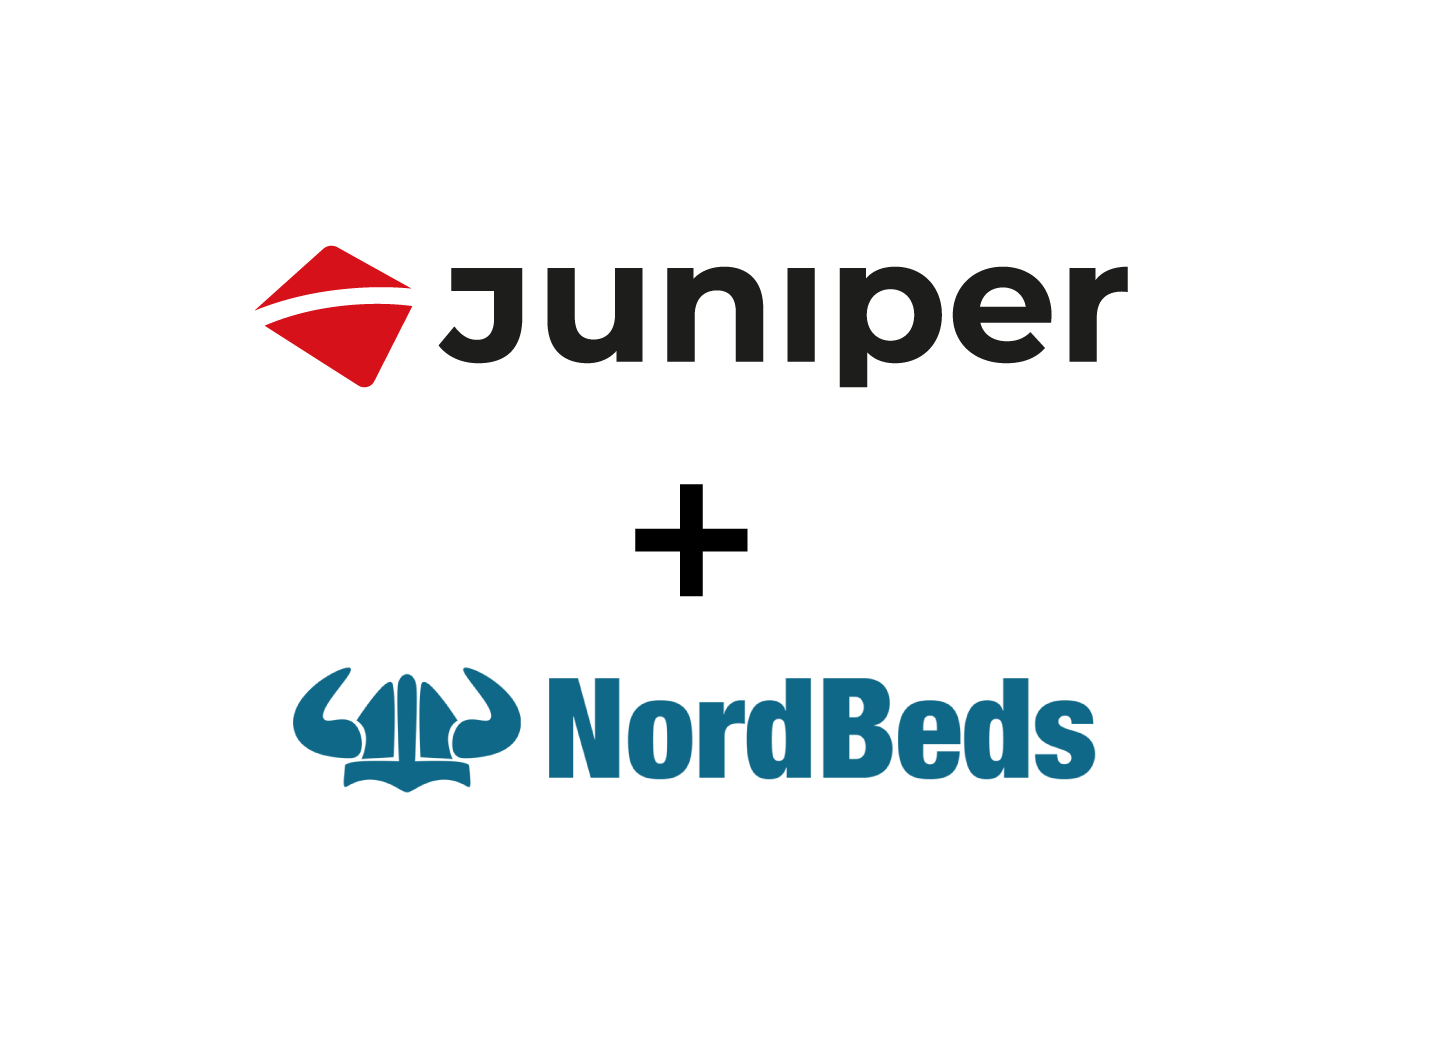 NordBeds connection through Juniper